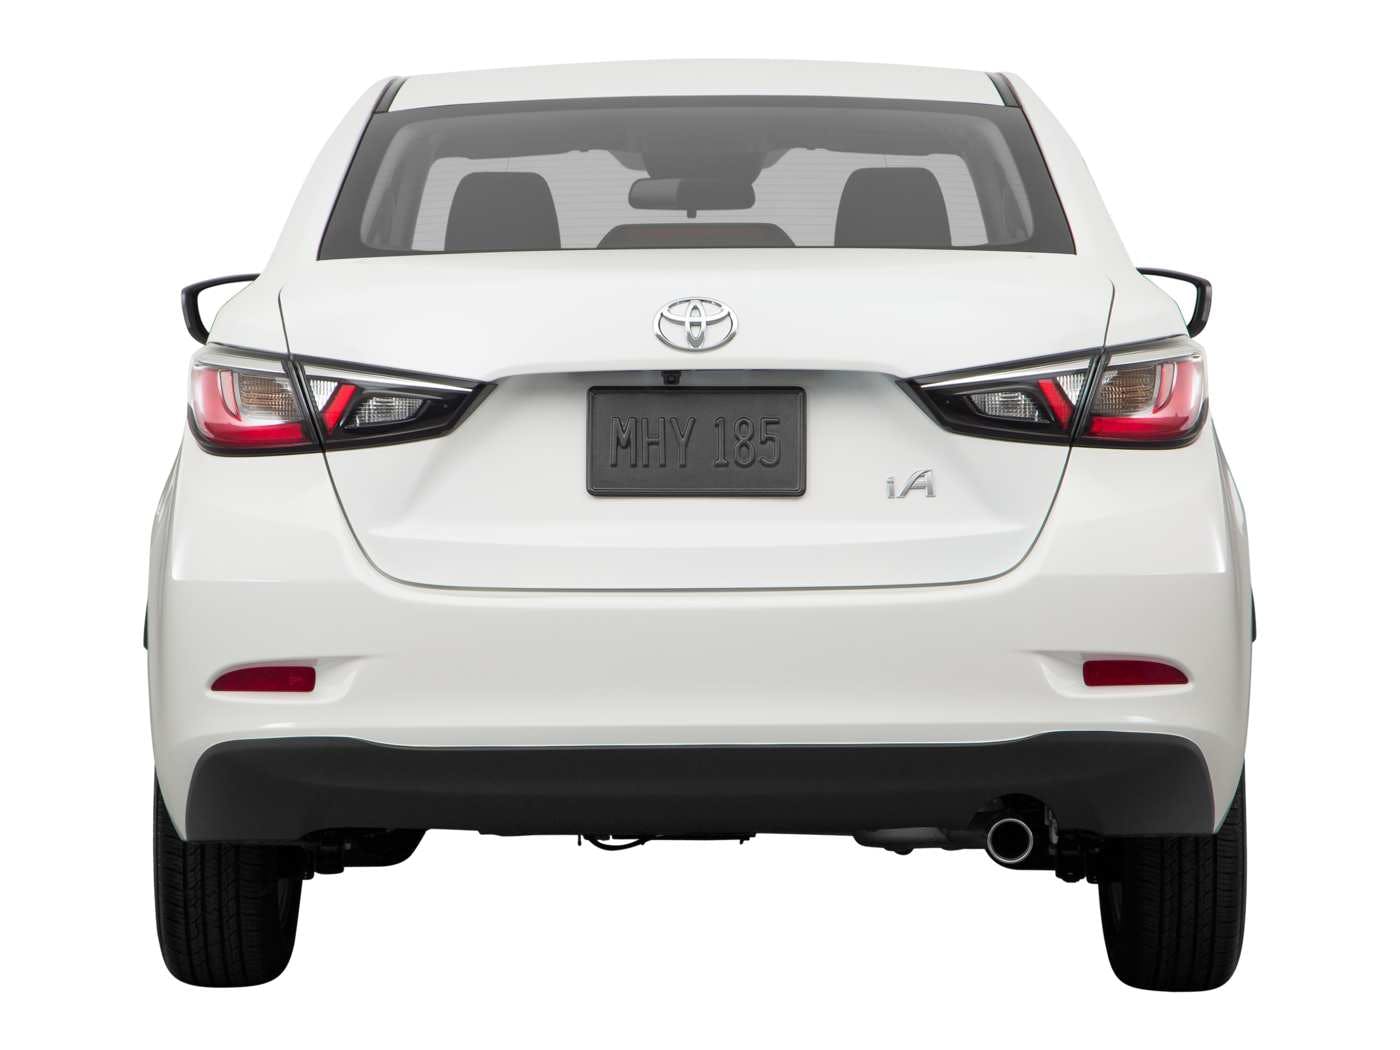 2018 Toyota Yaris iA Review | Pricing, Trims & Photos - TrueCar